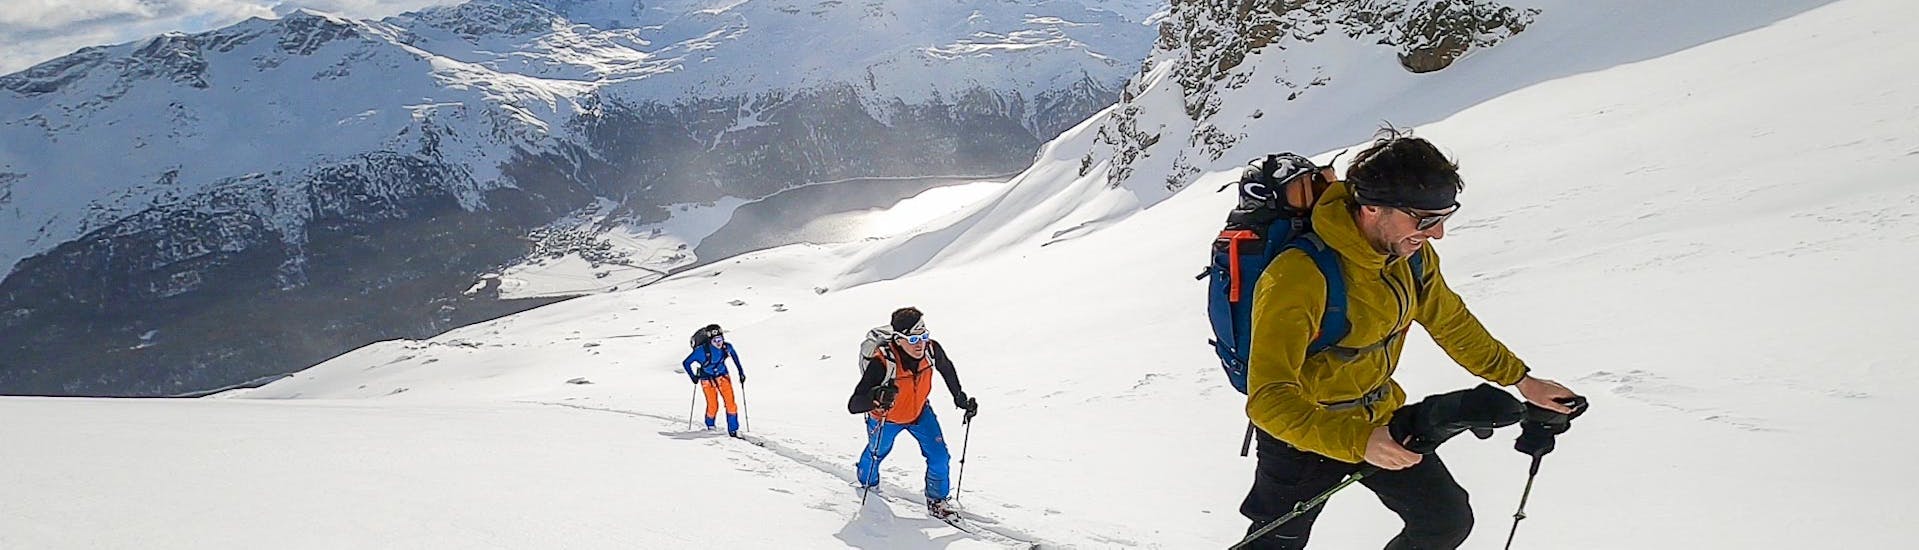 Private Ski Touring Guide for All Levels from Ski School PassionSki - St. Moritz.